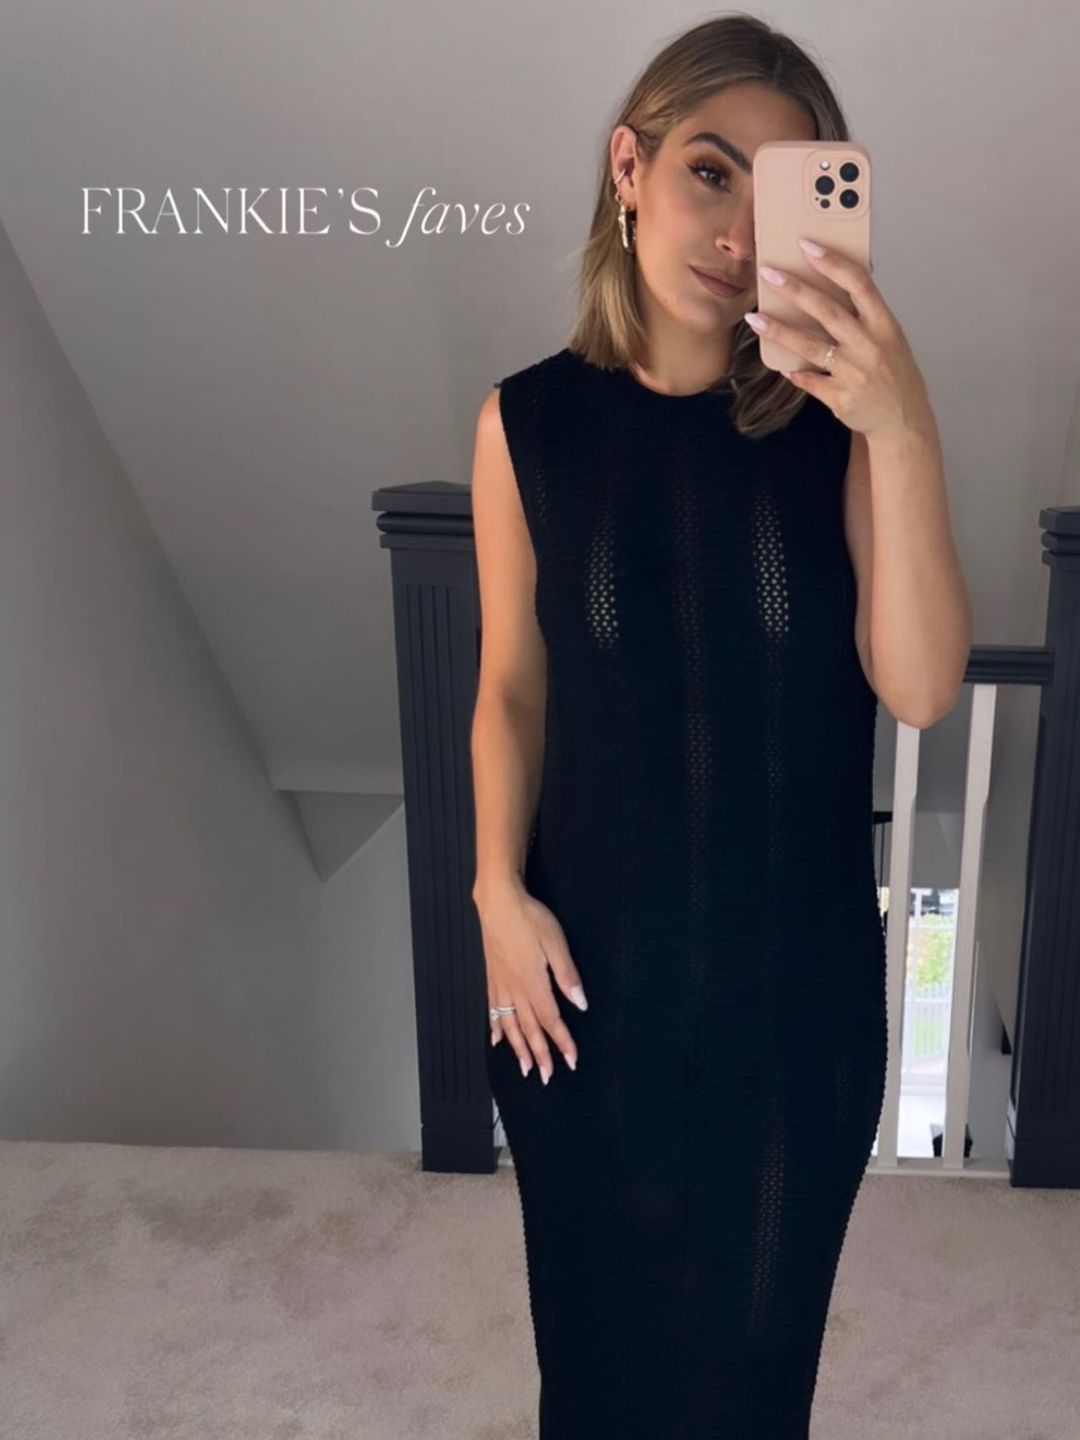 frankie bridge instagram black crochet dress